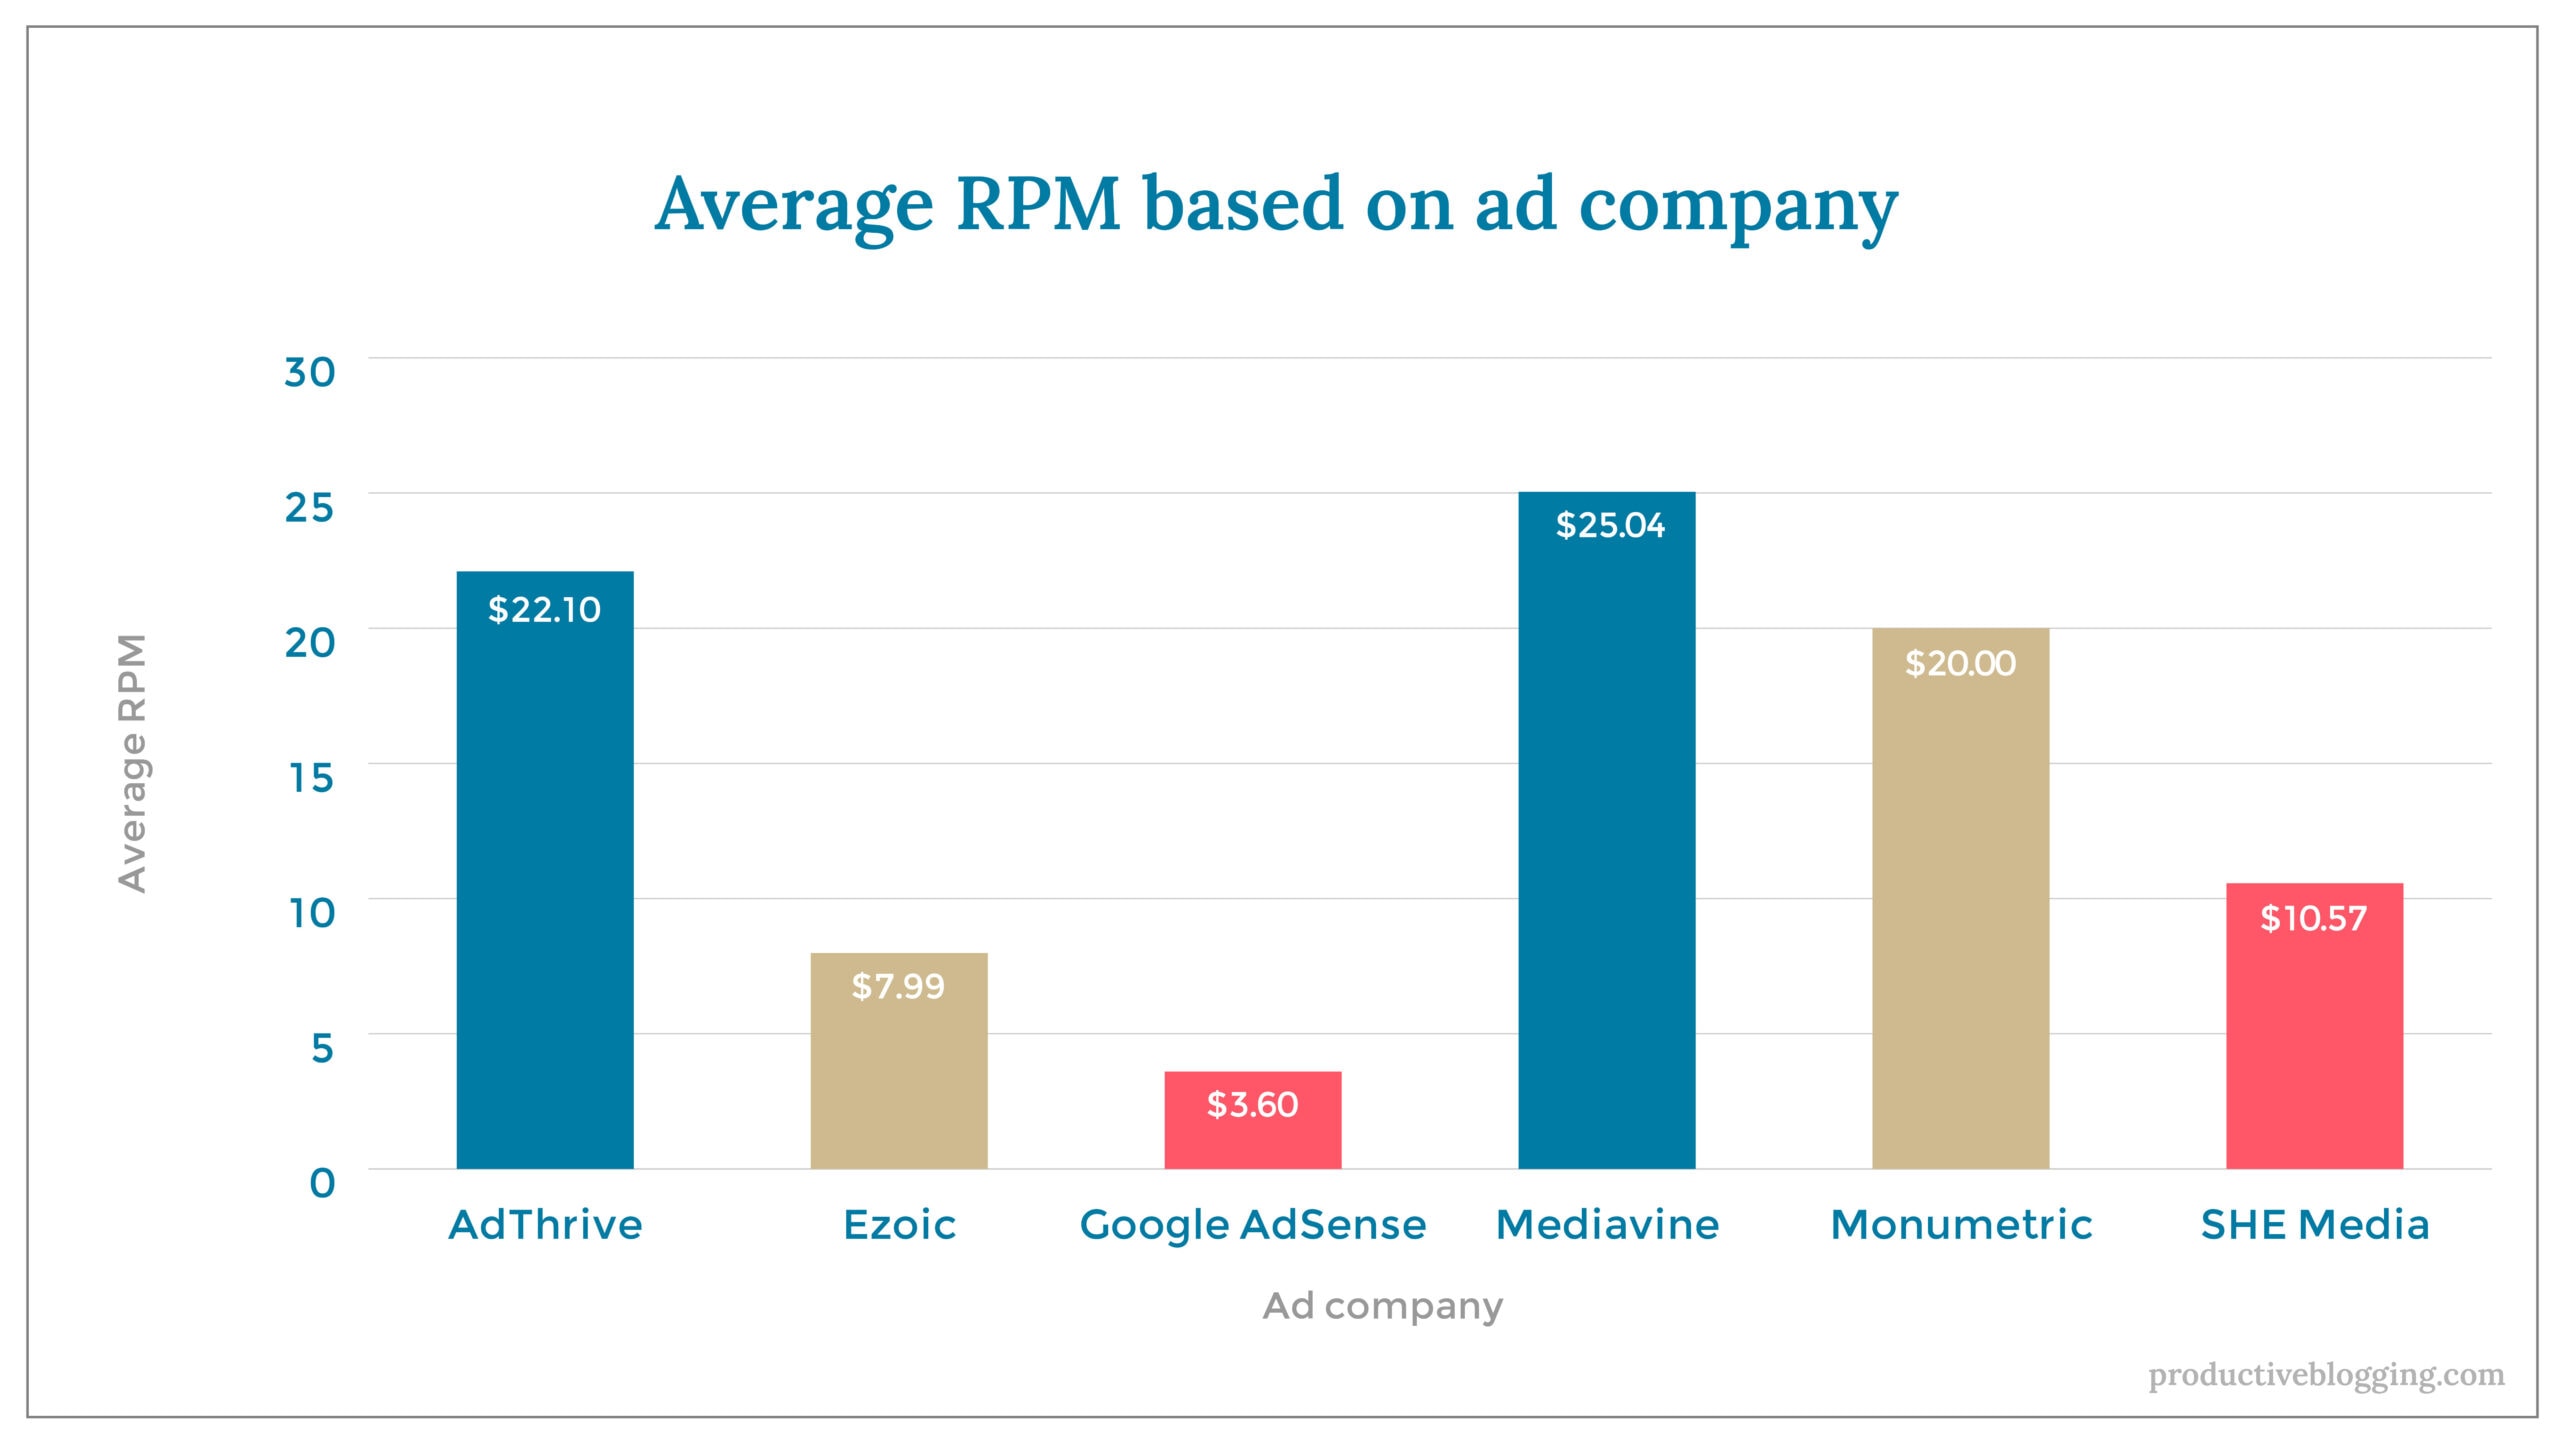 Average RPM based on ad companyX axis: Ad companyY axis: Average RPMAdThrive		$22.10Ezoic			$7.99Google AdSense	$3.60Mediavine		$25.04Monumetric		$20.00SHE Media		$10.57